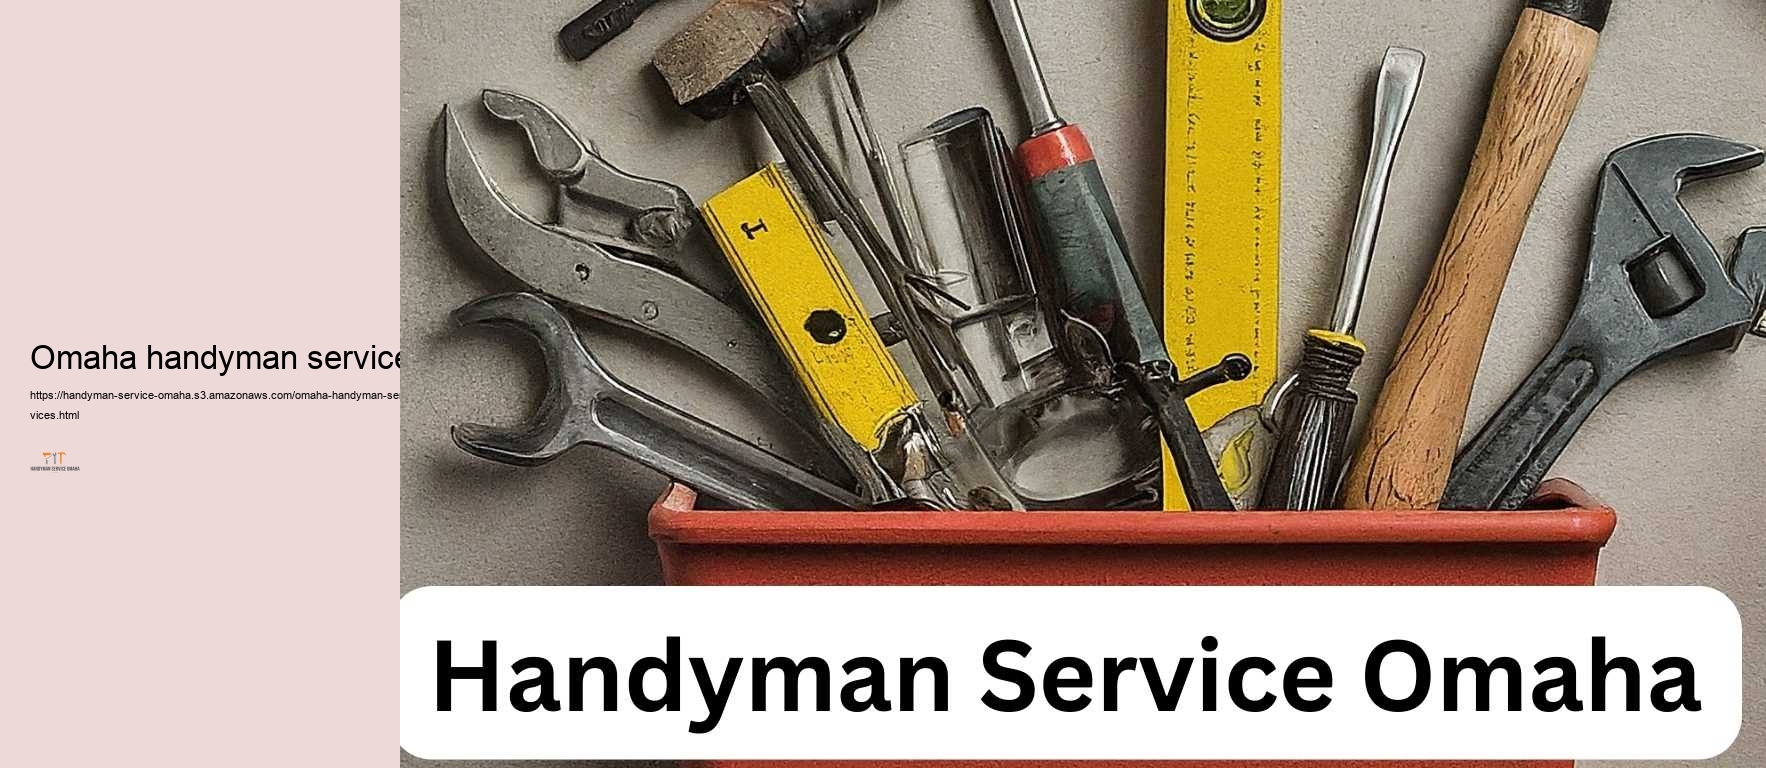 Omaha handyman services